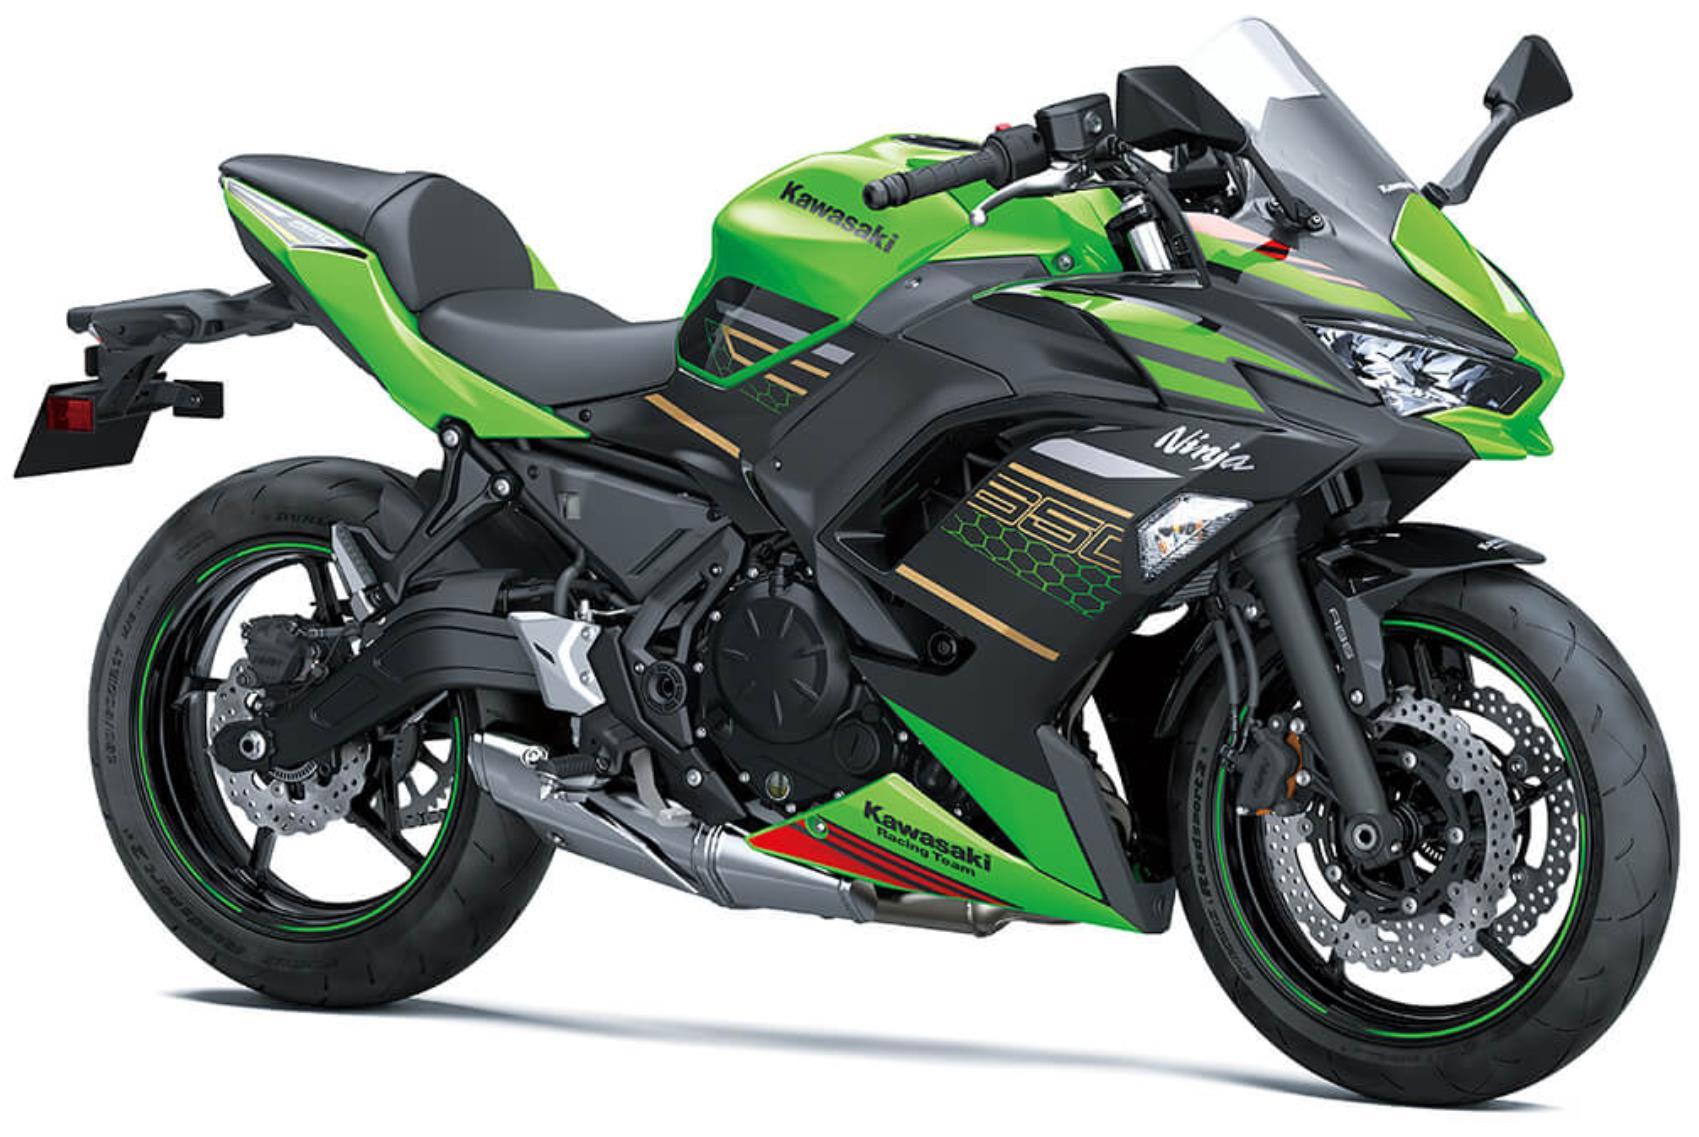 2022 Kawasaki Ninja 650 Price, Specs, Top Speed & Mileage in India